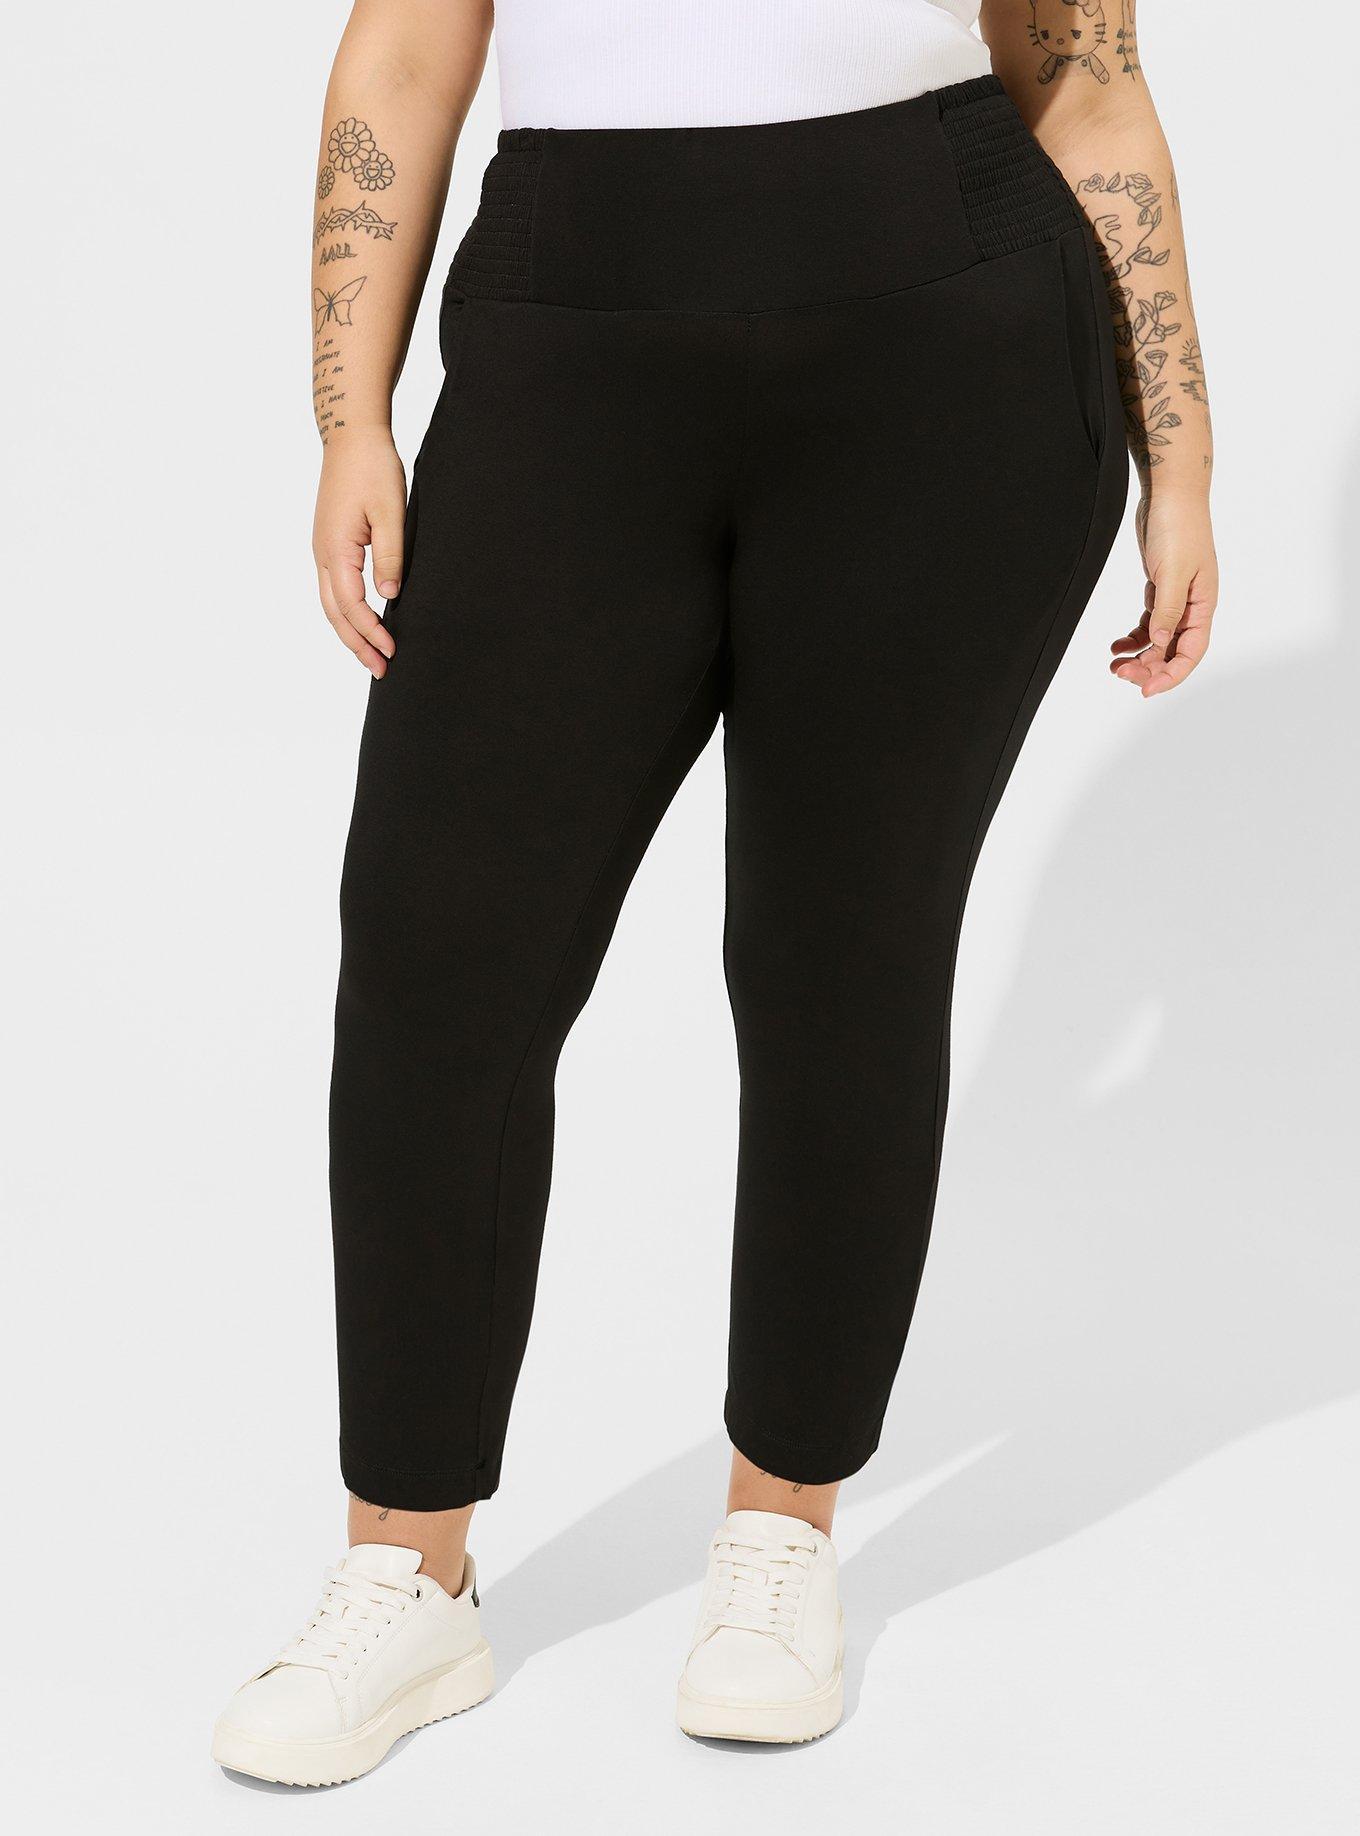 Plus Size - Pull-On Tapered Pant - Super Soft Black - Torrid